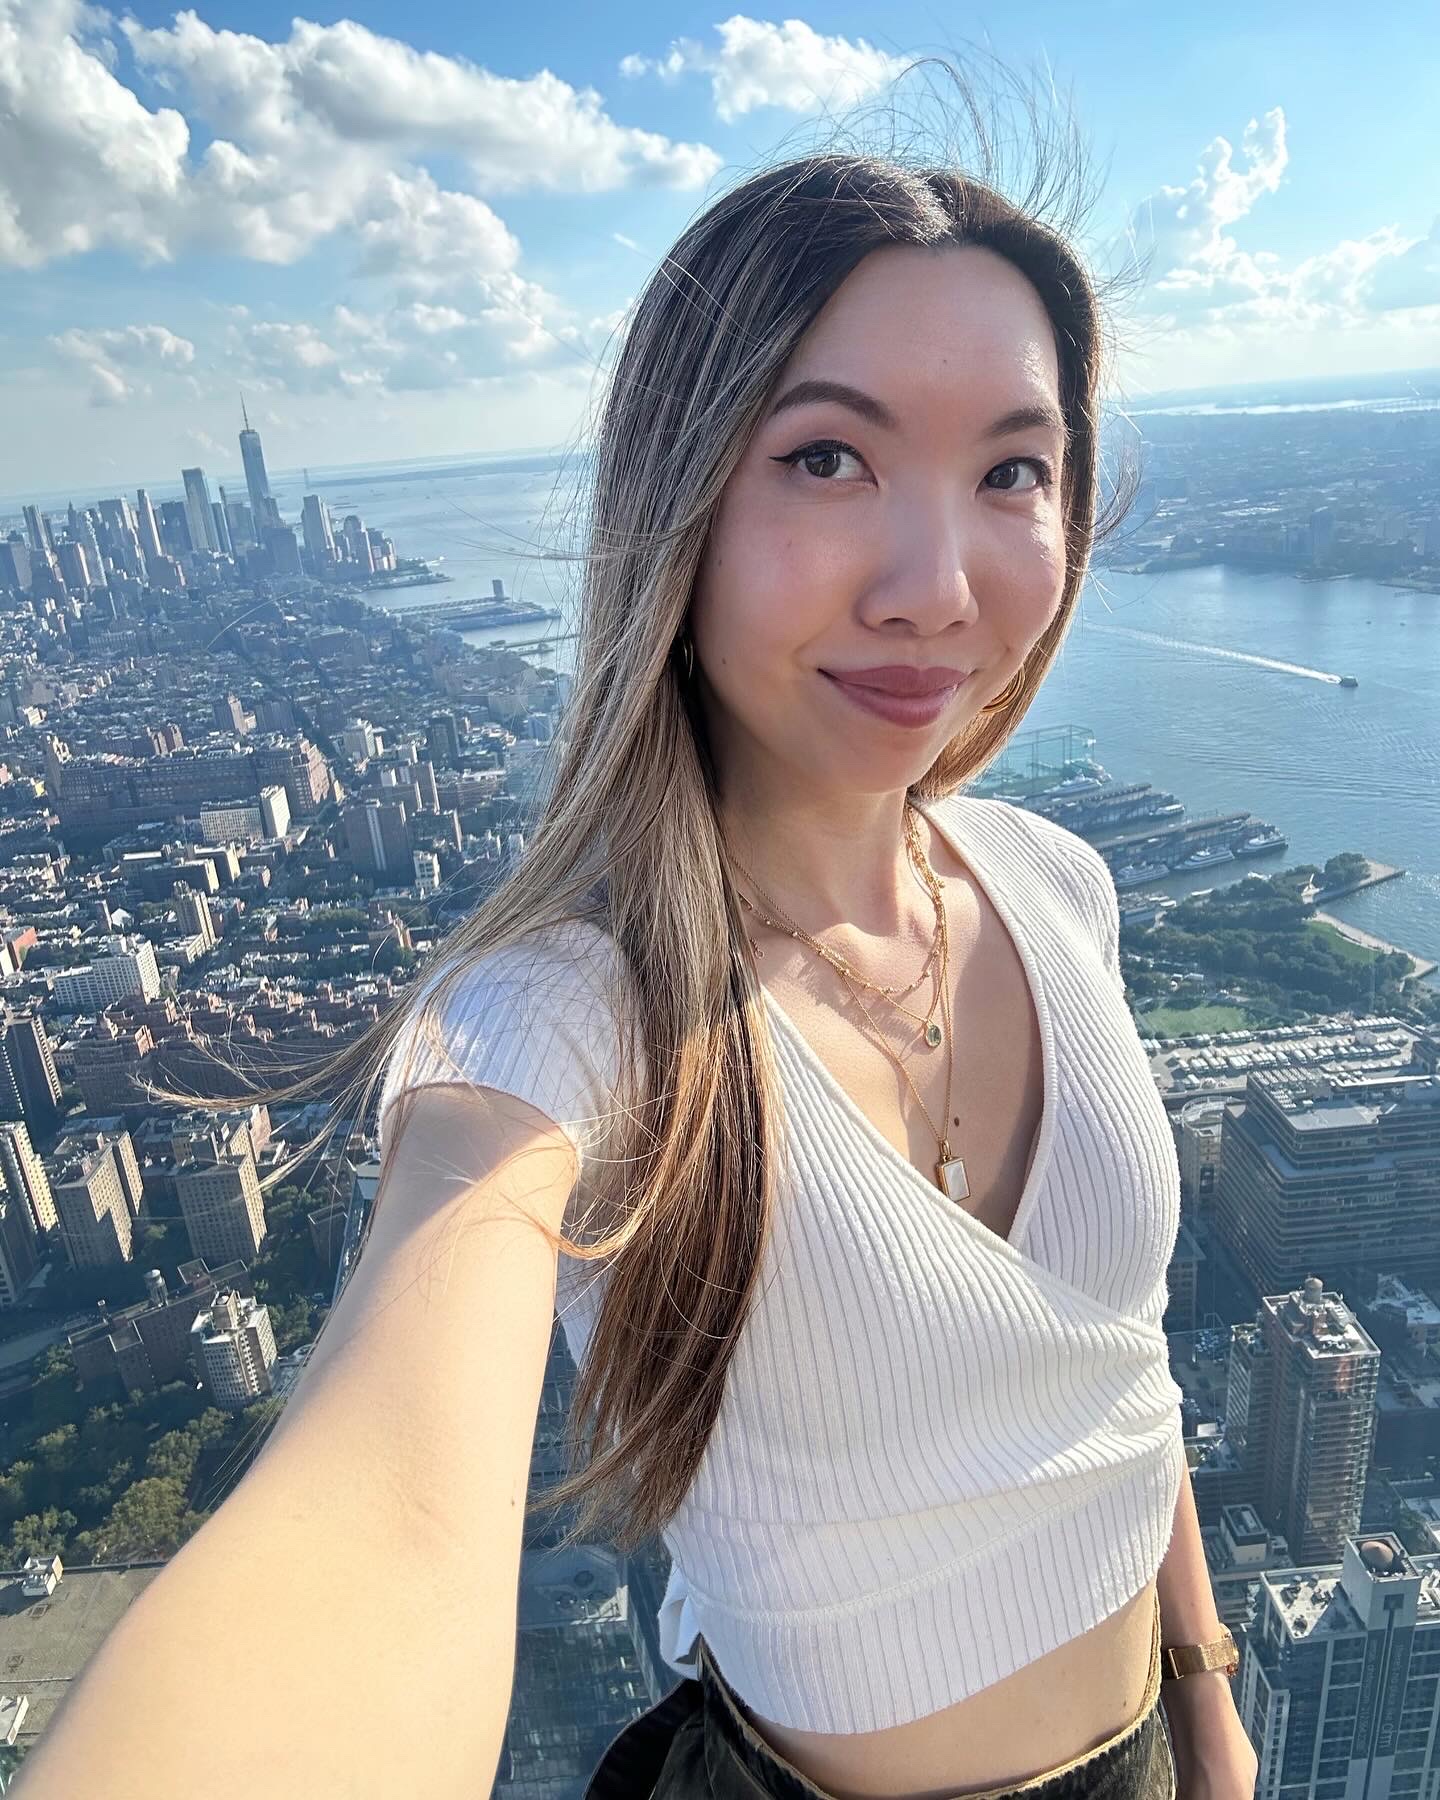 Edge Hudson Yards Peak New York skyline observatory style selfie